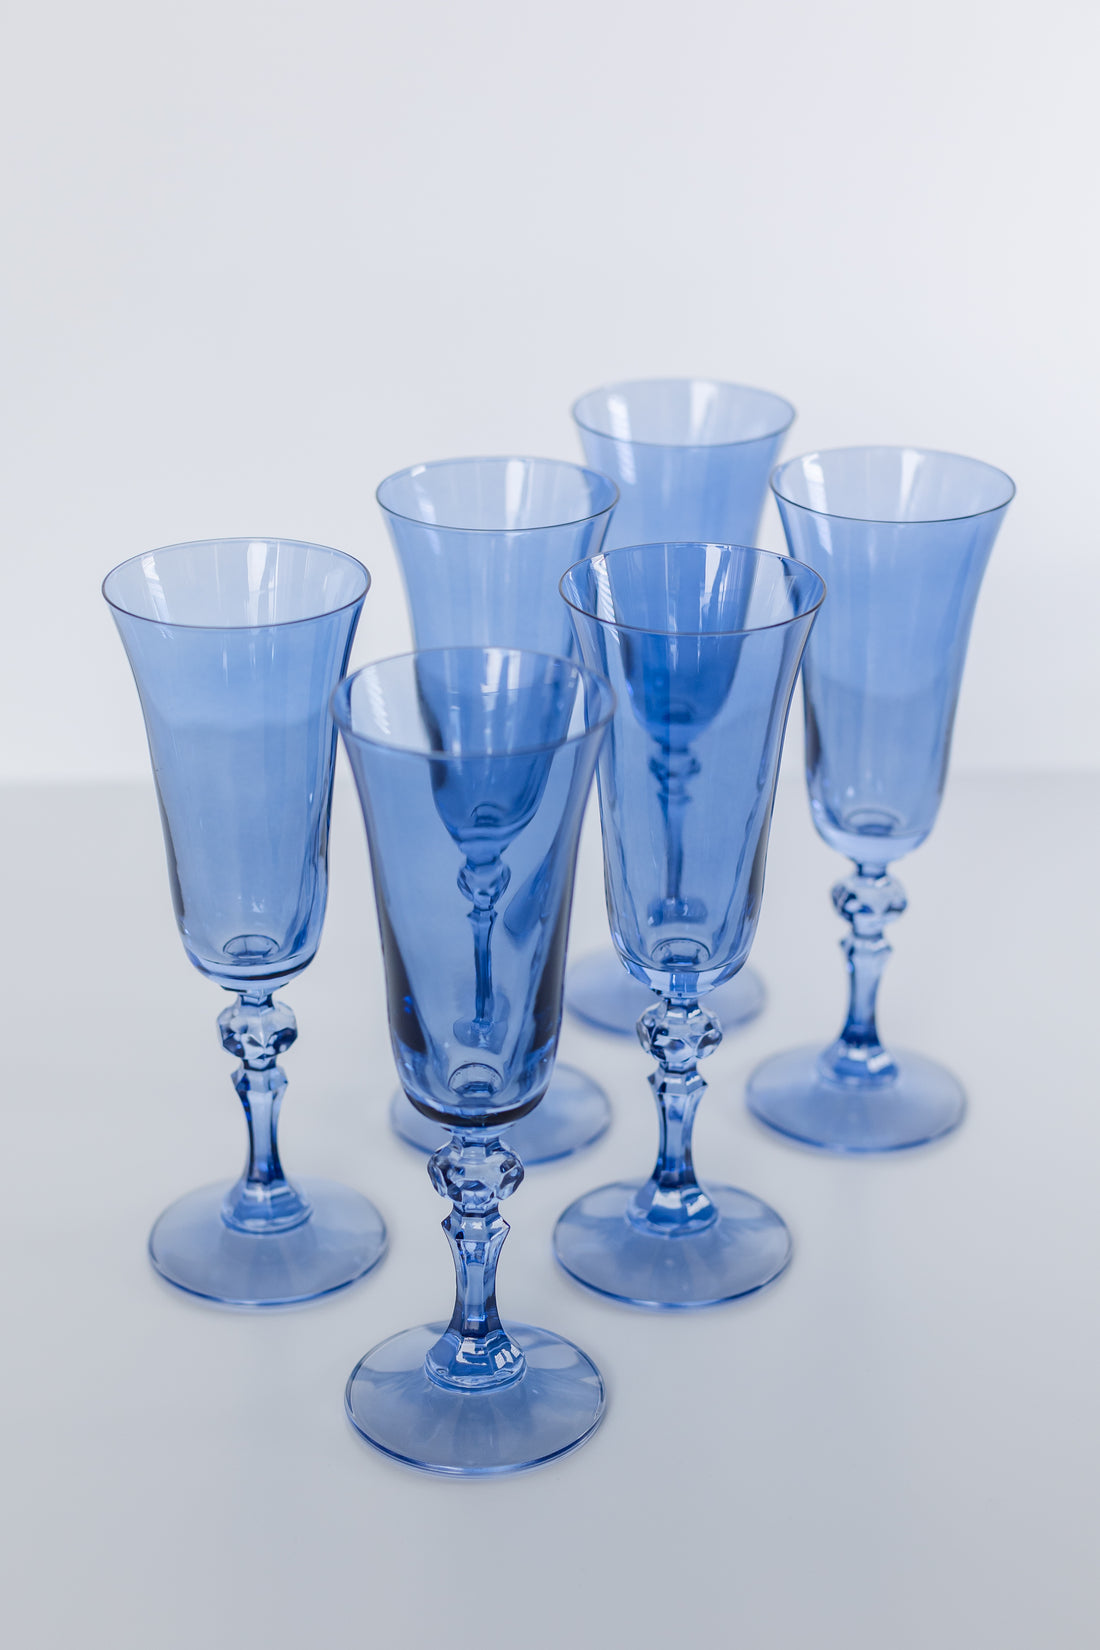 Estelle Colored Champagne Flute - Set of 6 {Pastel Mixed Set} – Estelle  Colored Glass